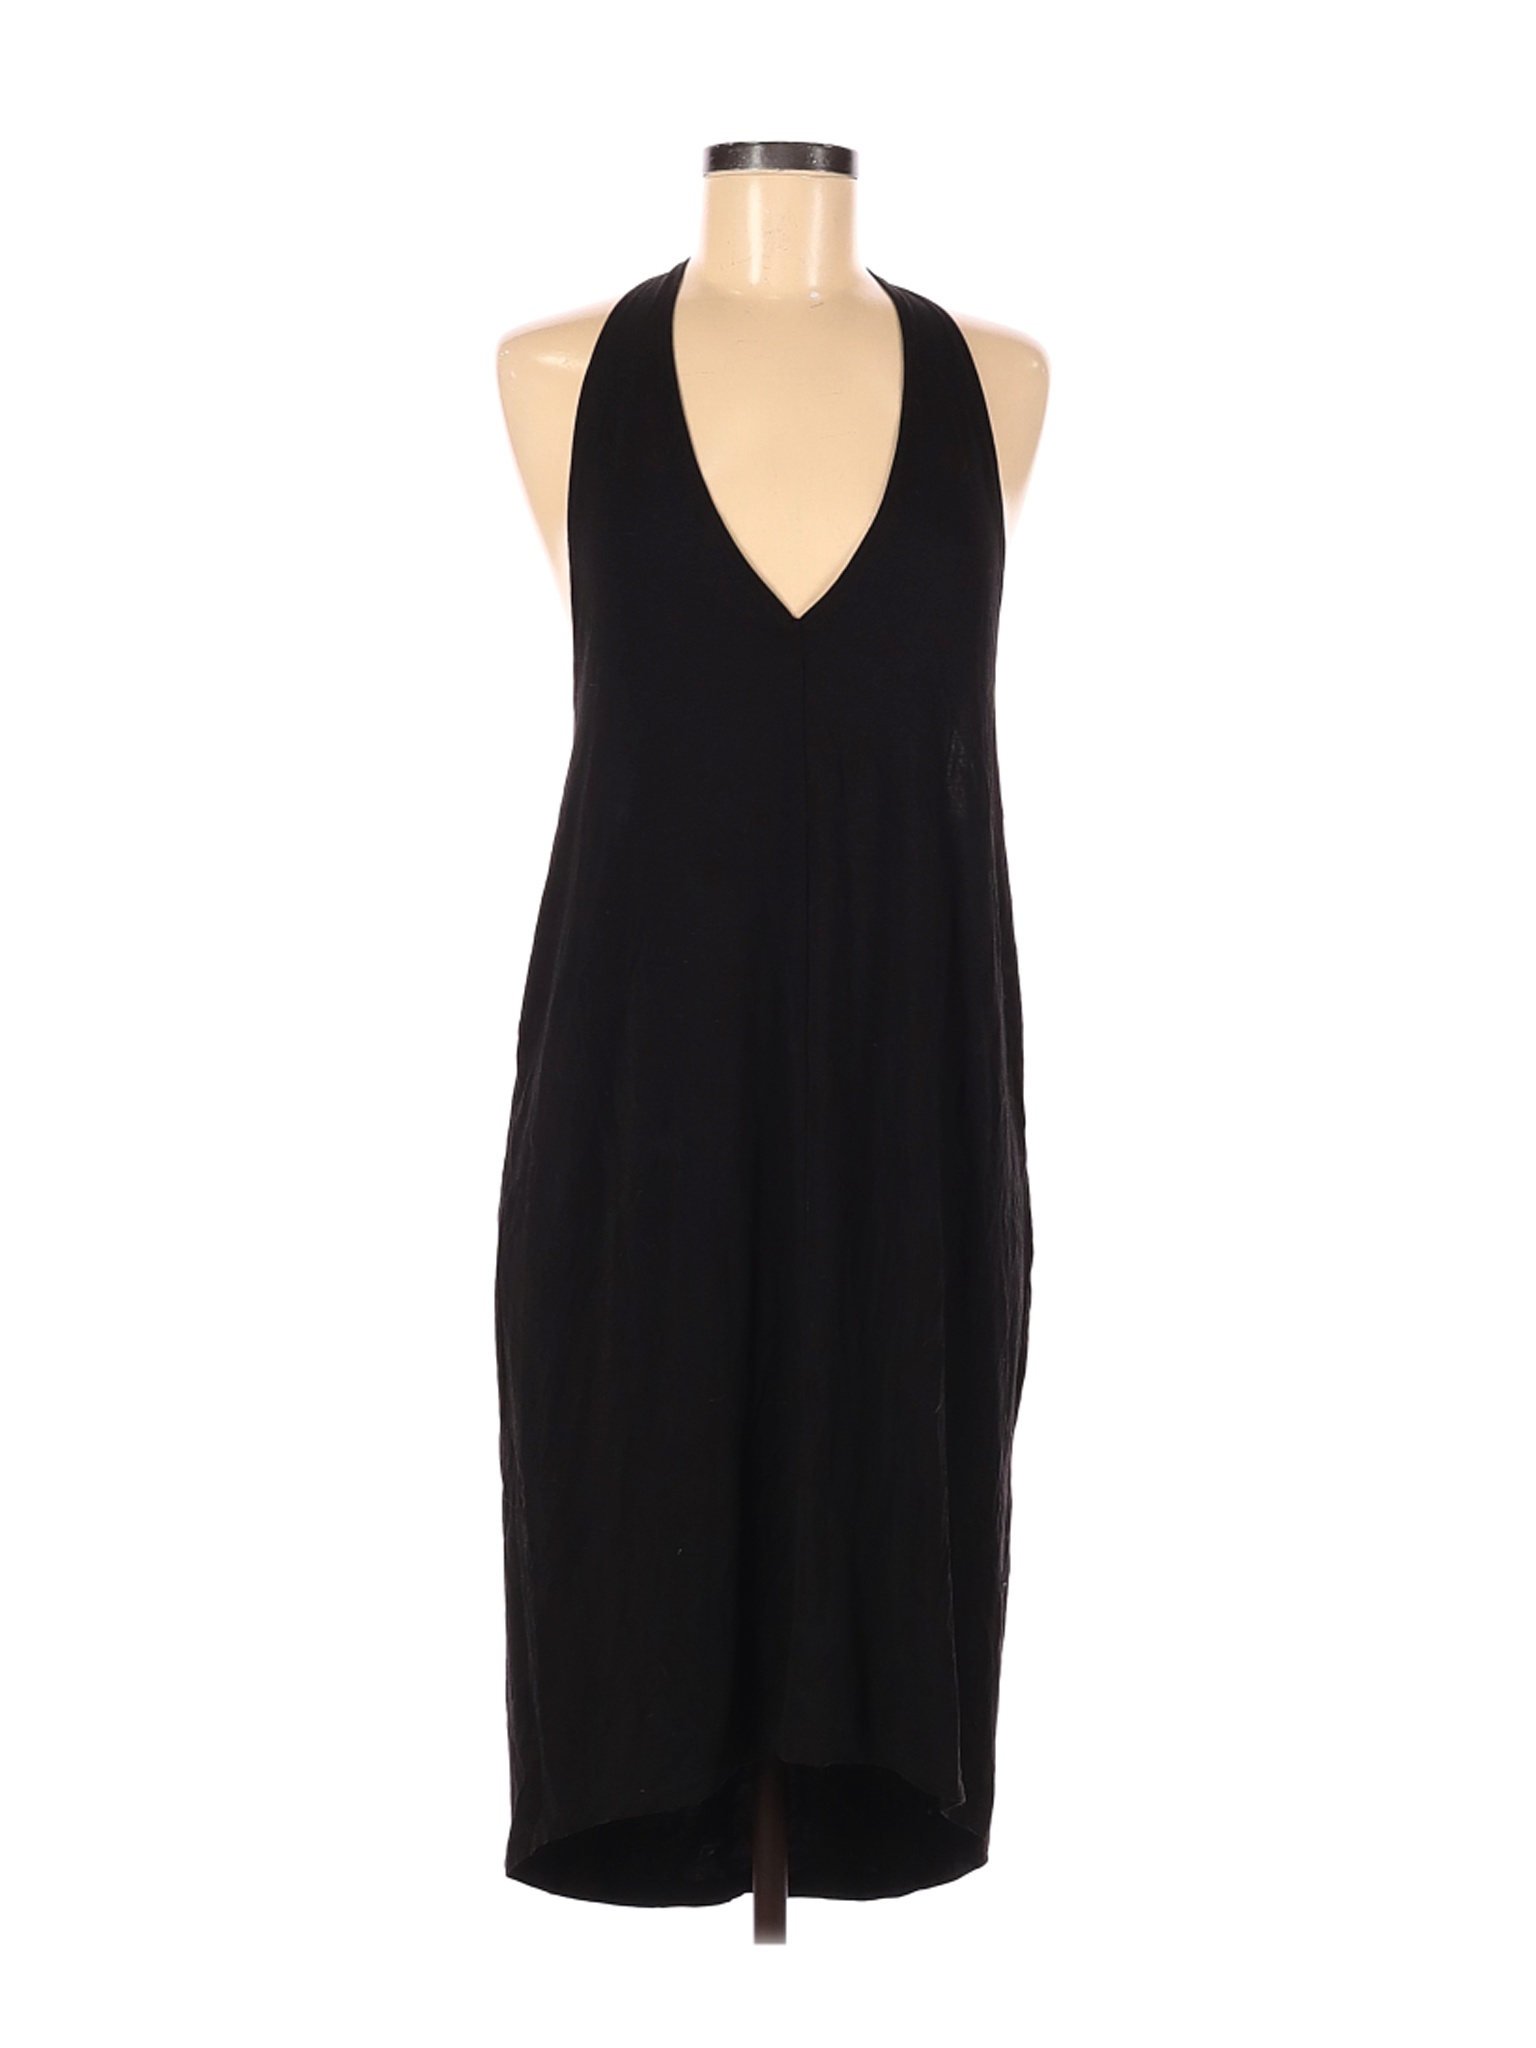 Threads 4 Thought Women Black Casual Dress M | eBay